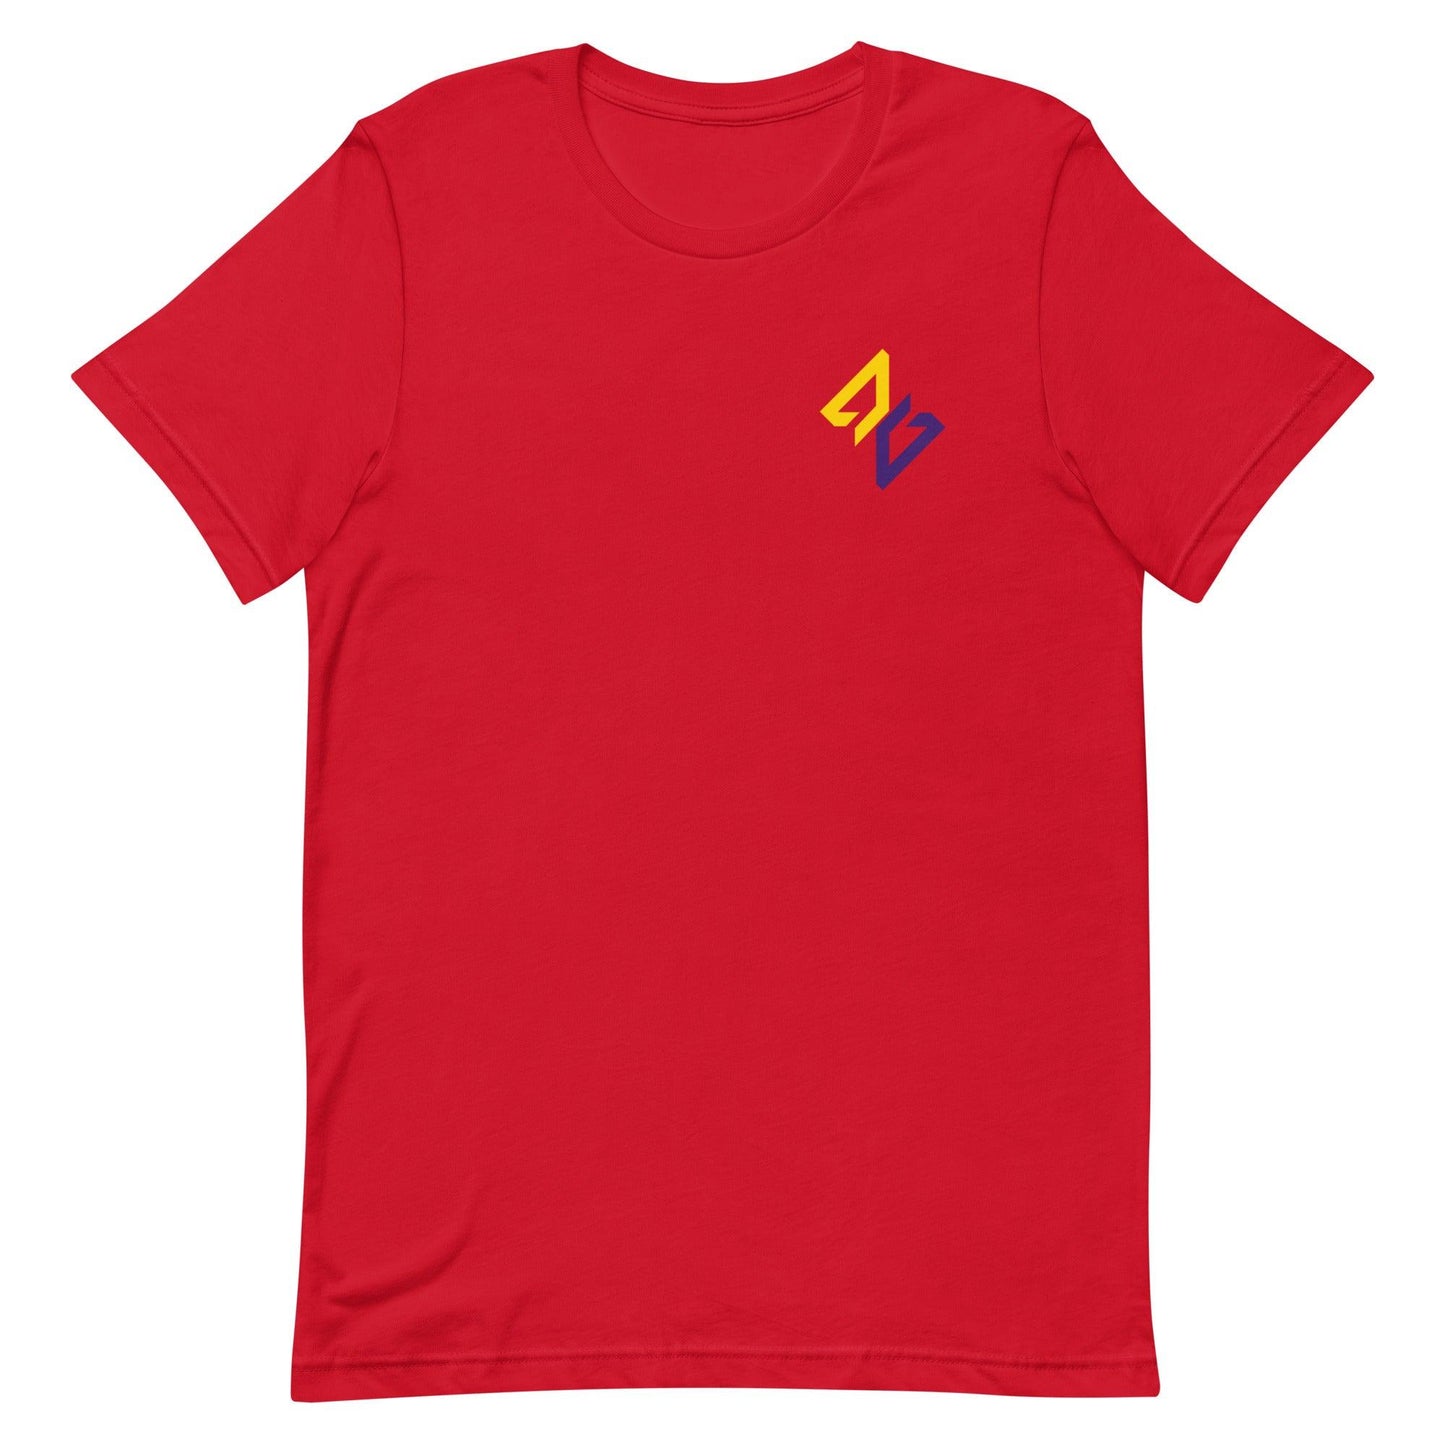 Armoni Goodwin "Essential" t-shirt - Fan Arch